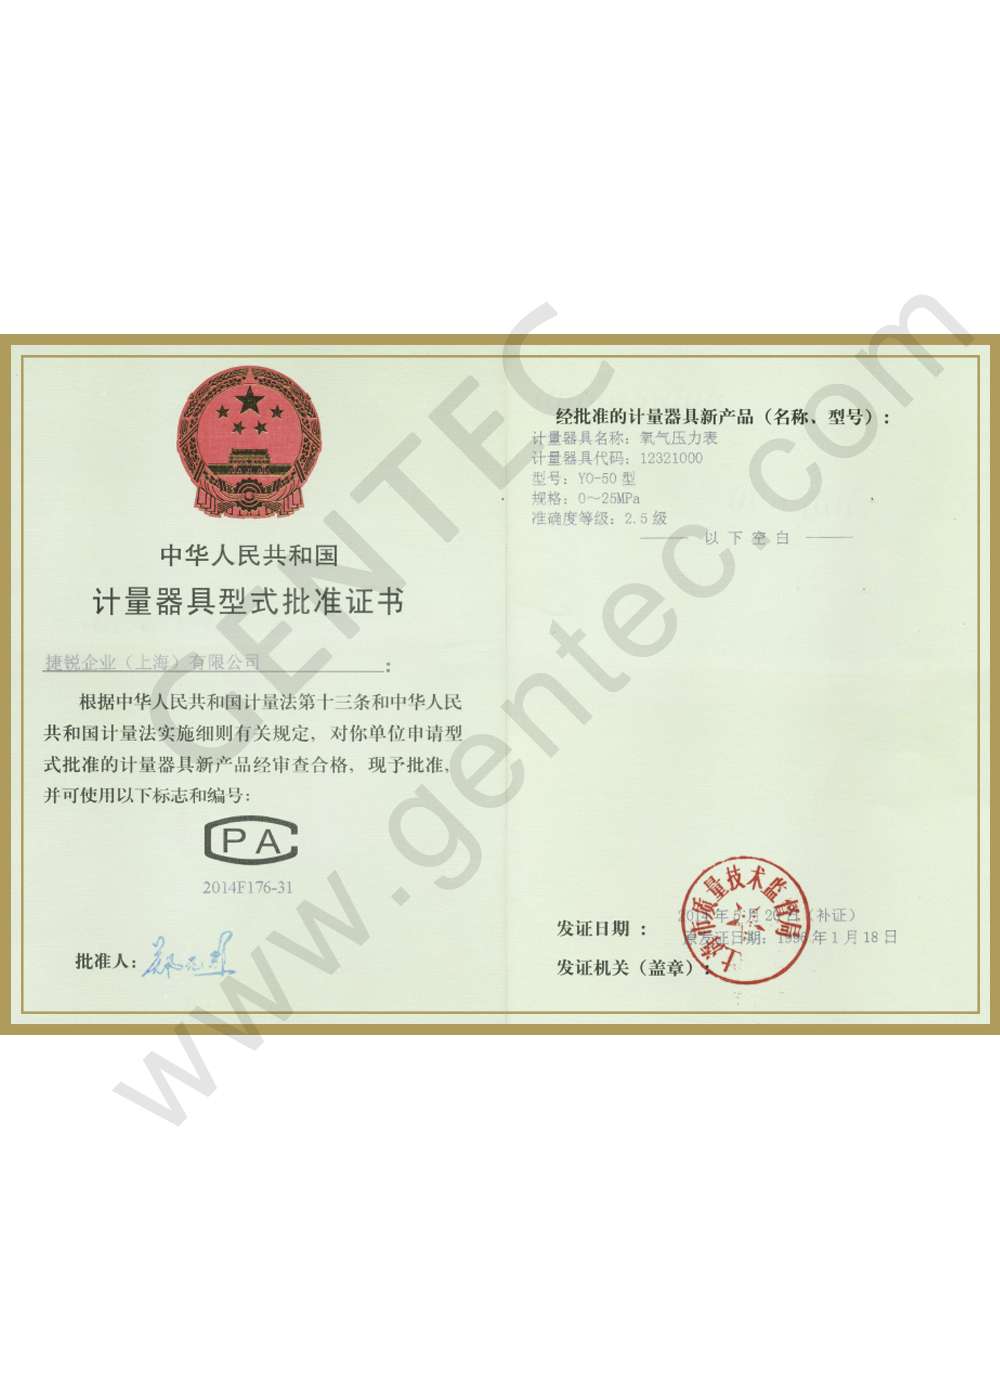 Approval Certificate (YO-50）